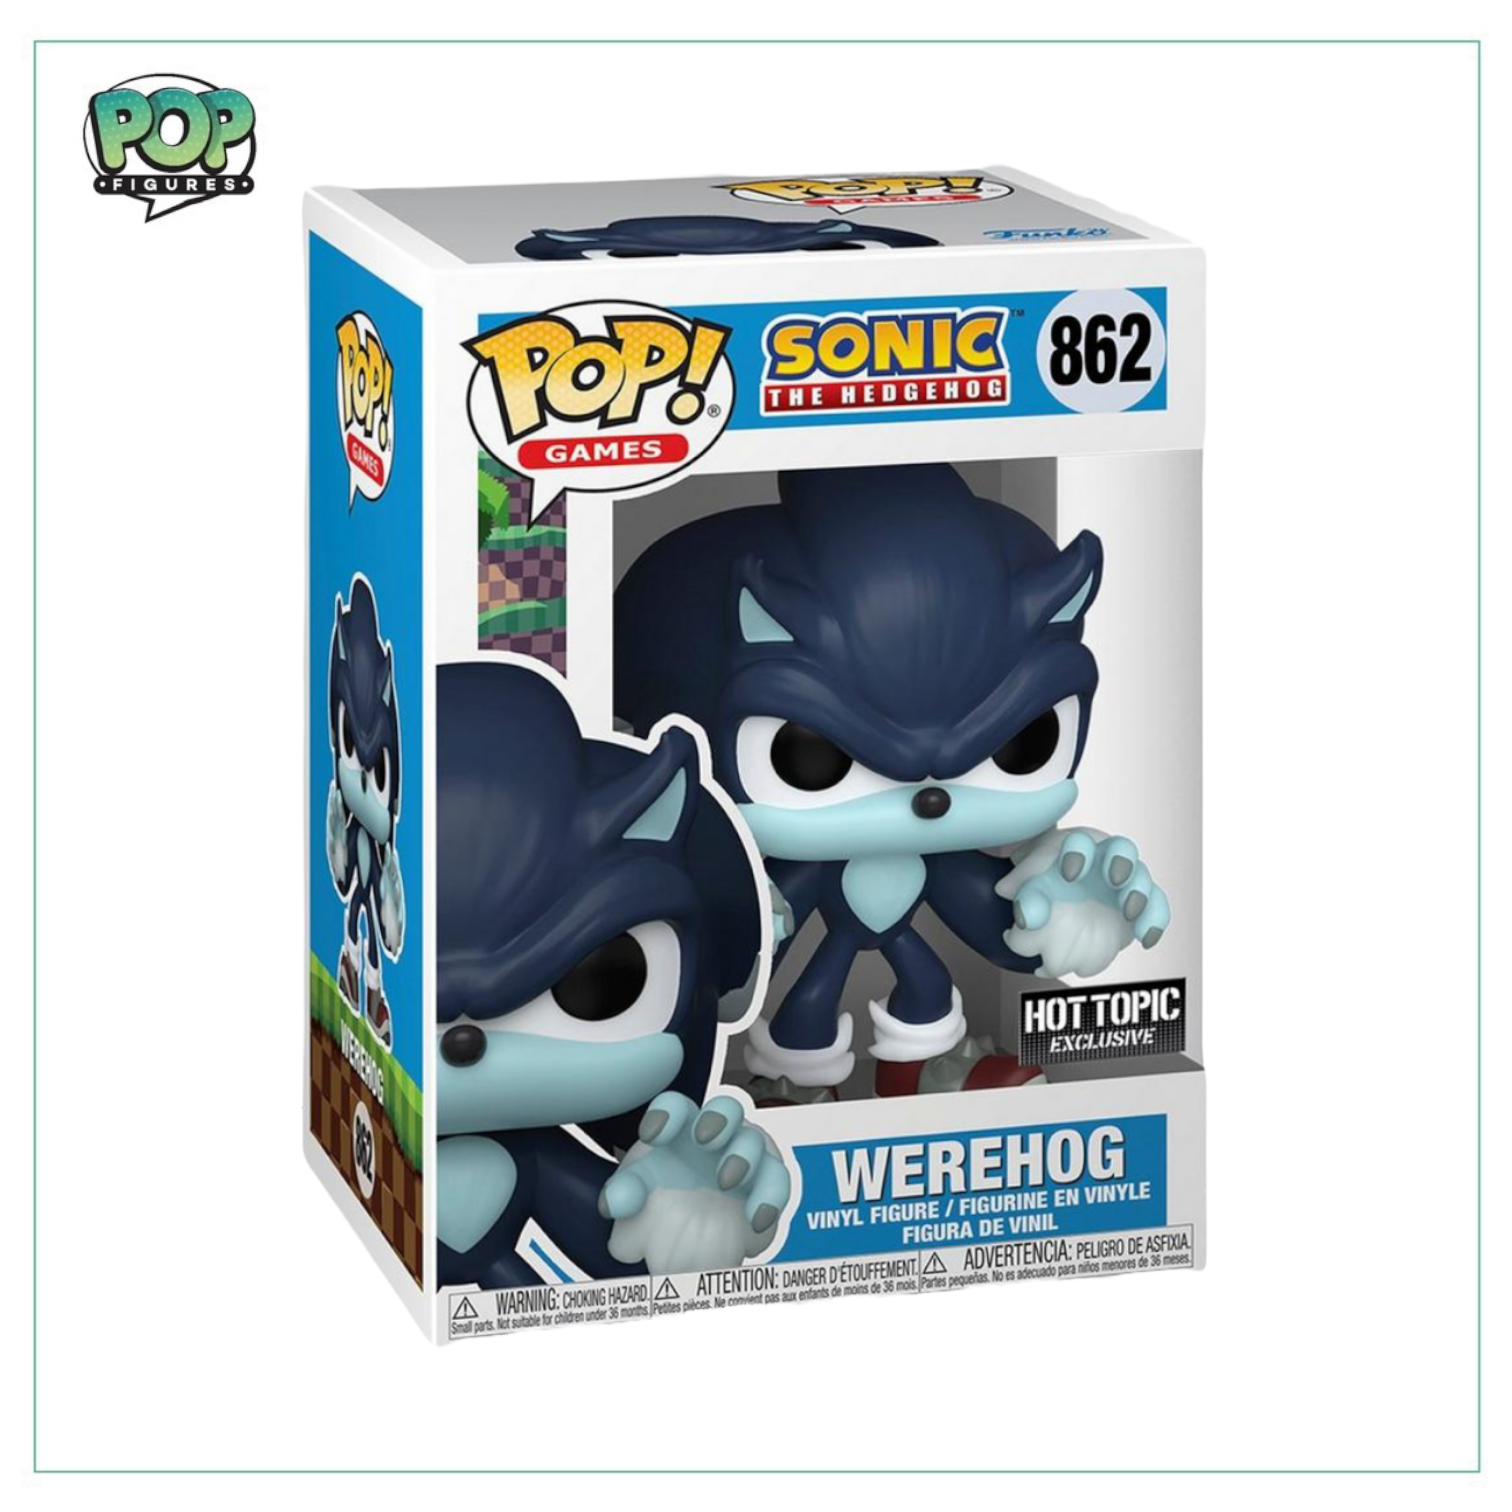 Werehog #862 Funko Pop! Sonic the Hedgehog - Hot Topic Exclusive